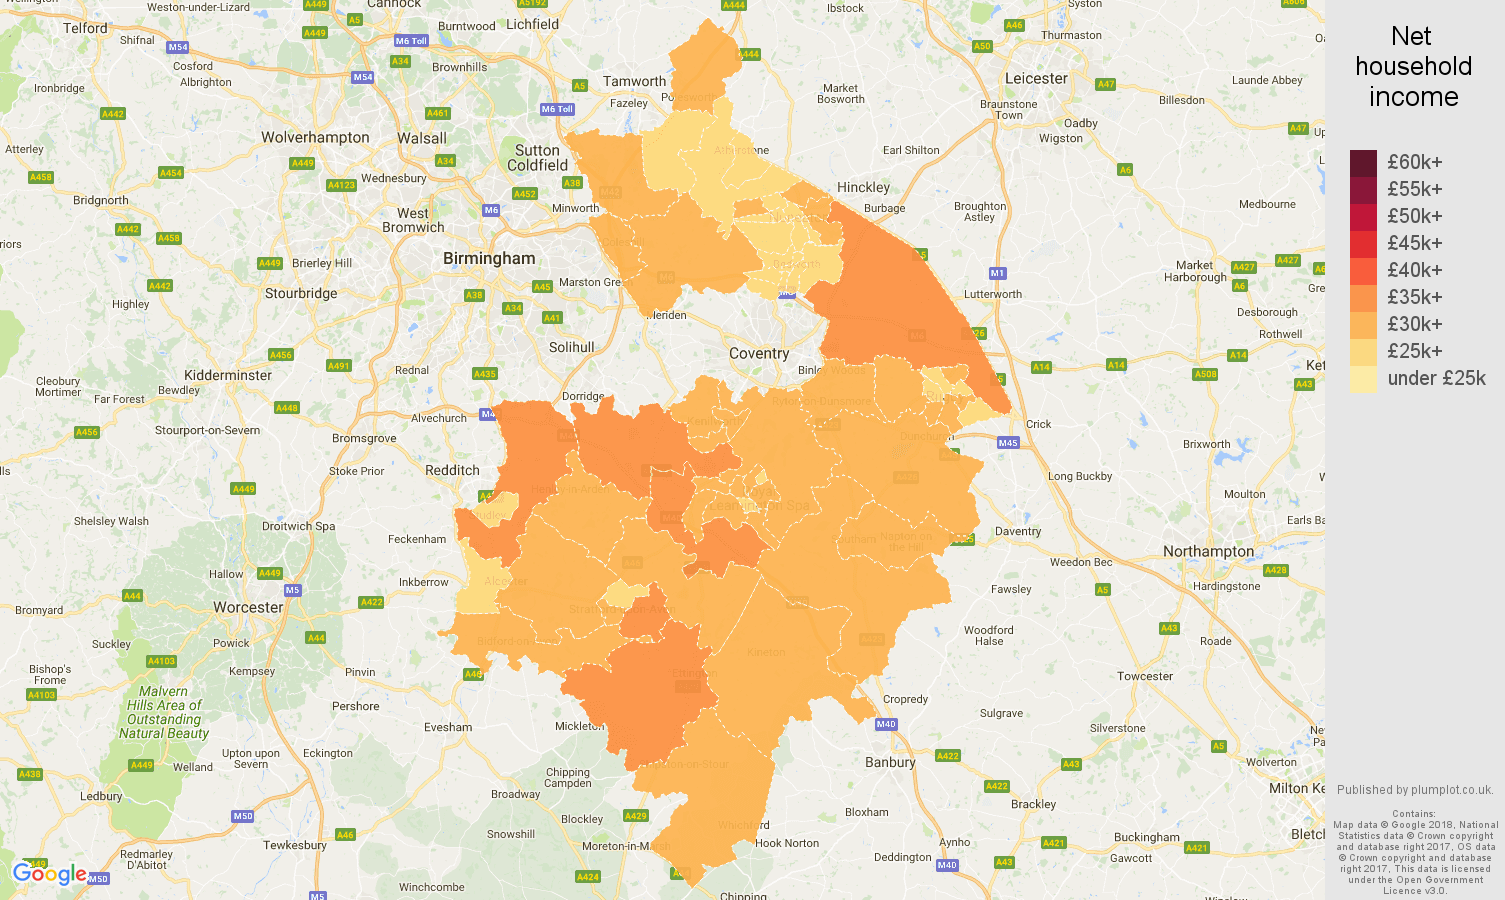 Warwickshire net household income map